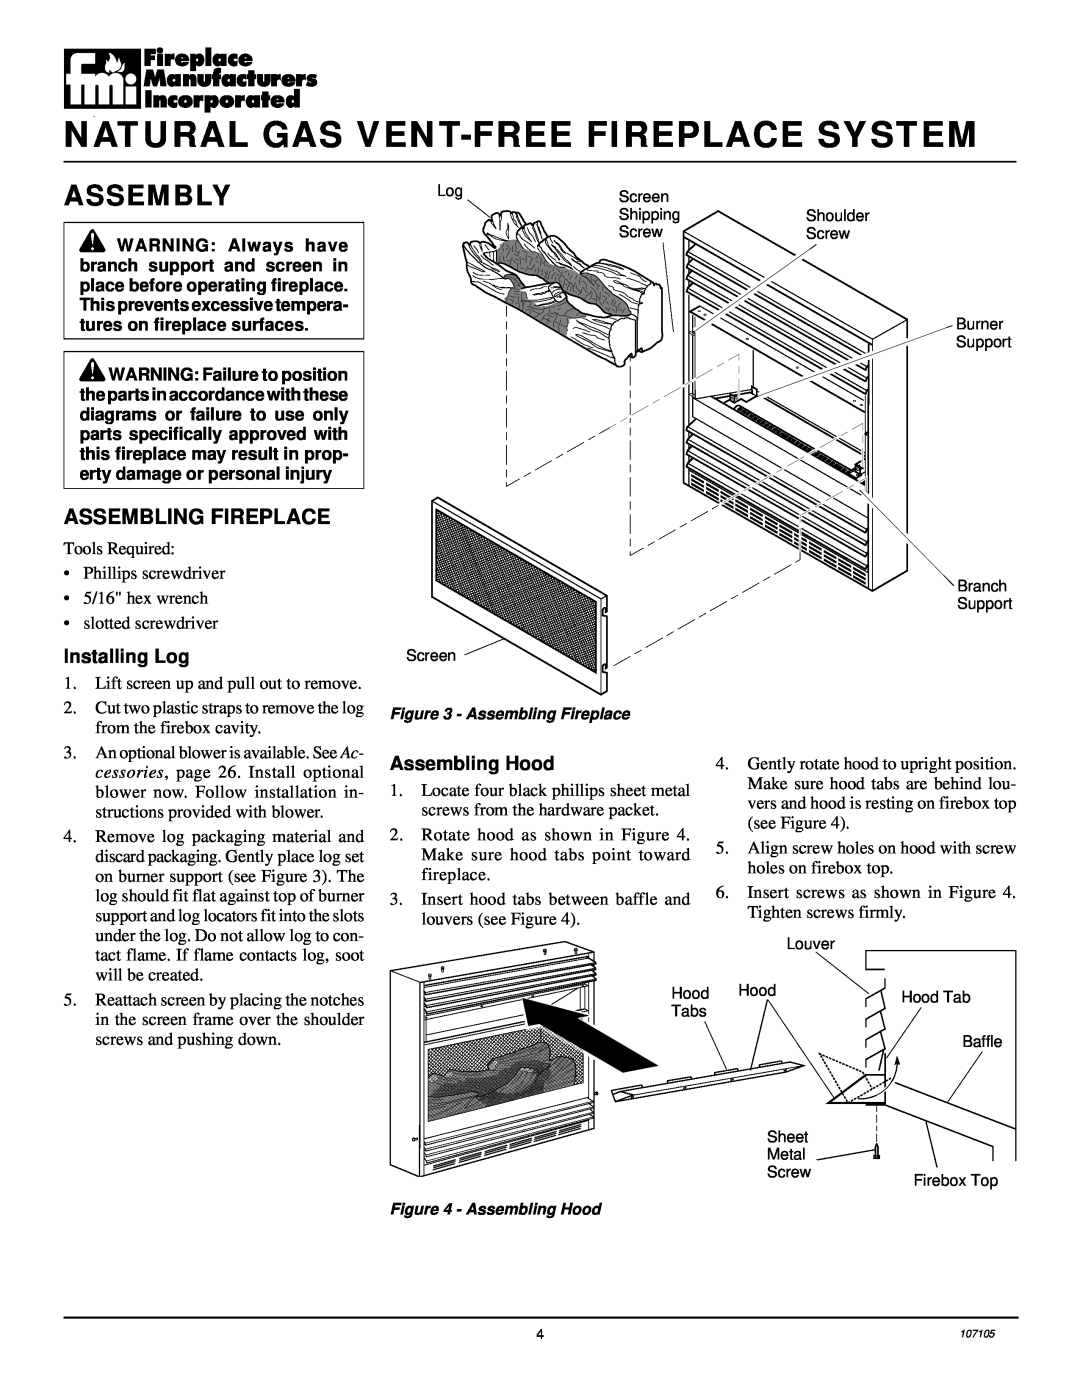 Desa FMH26TN 14 Assembly, Assembling Fireplace, Installing Log, Assembling Hood, cessories, page 26. Install optional 